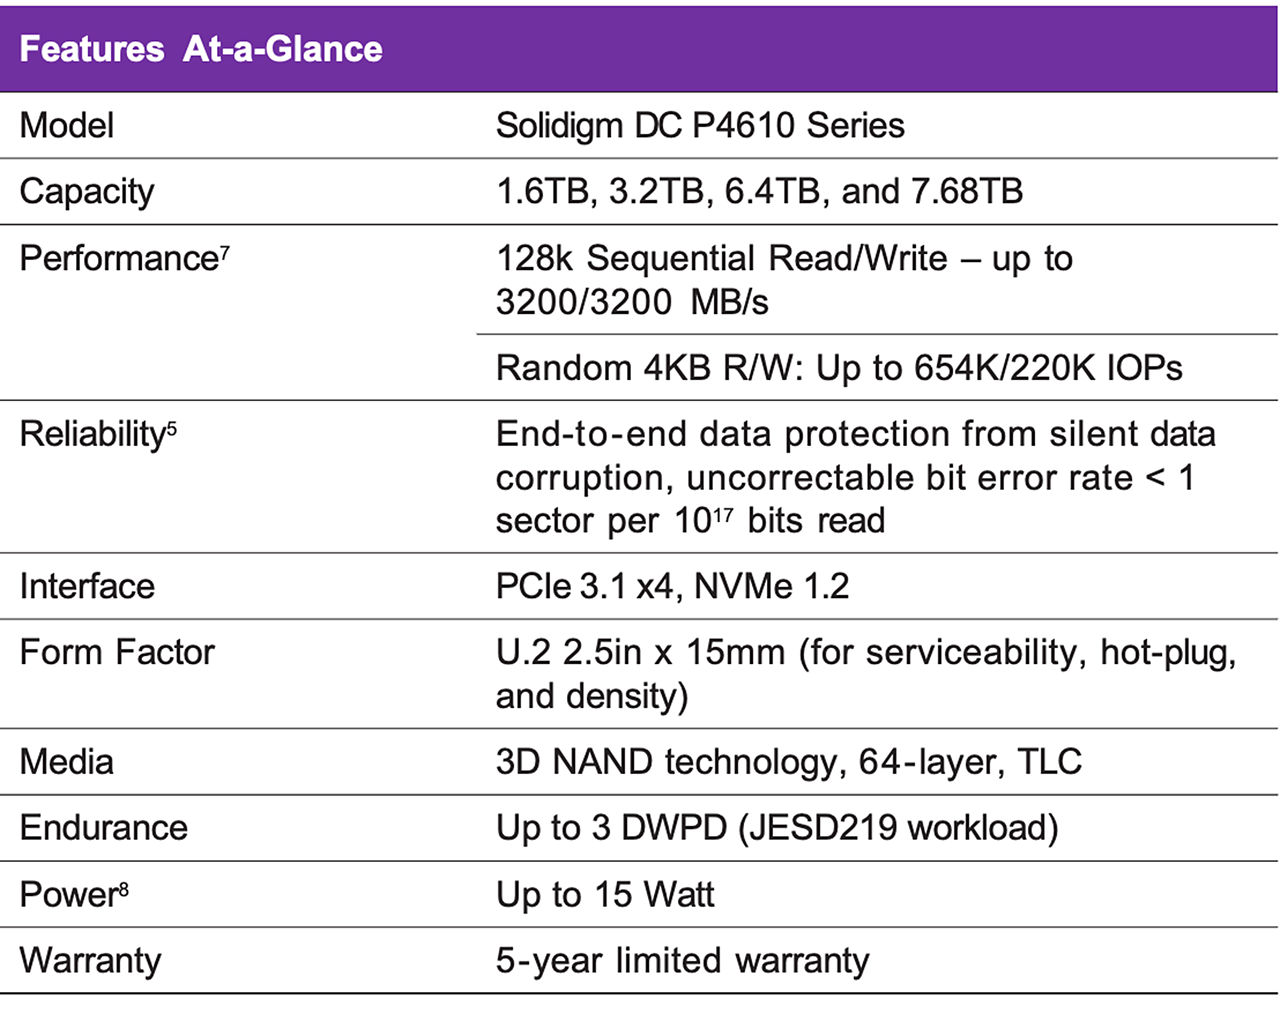 Solidigm DC-P4610 Features and Capabilities